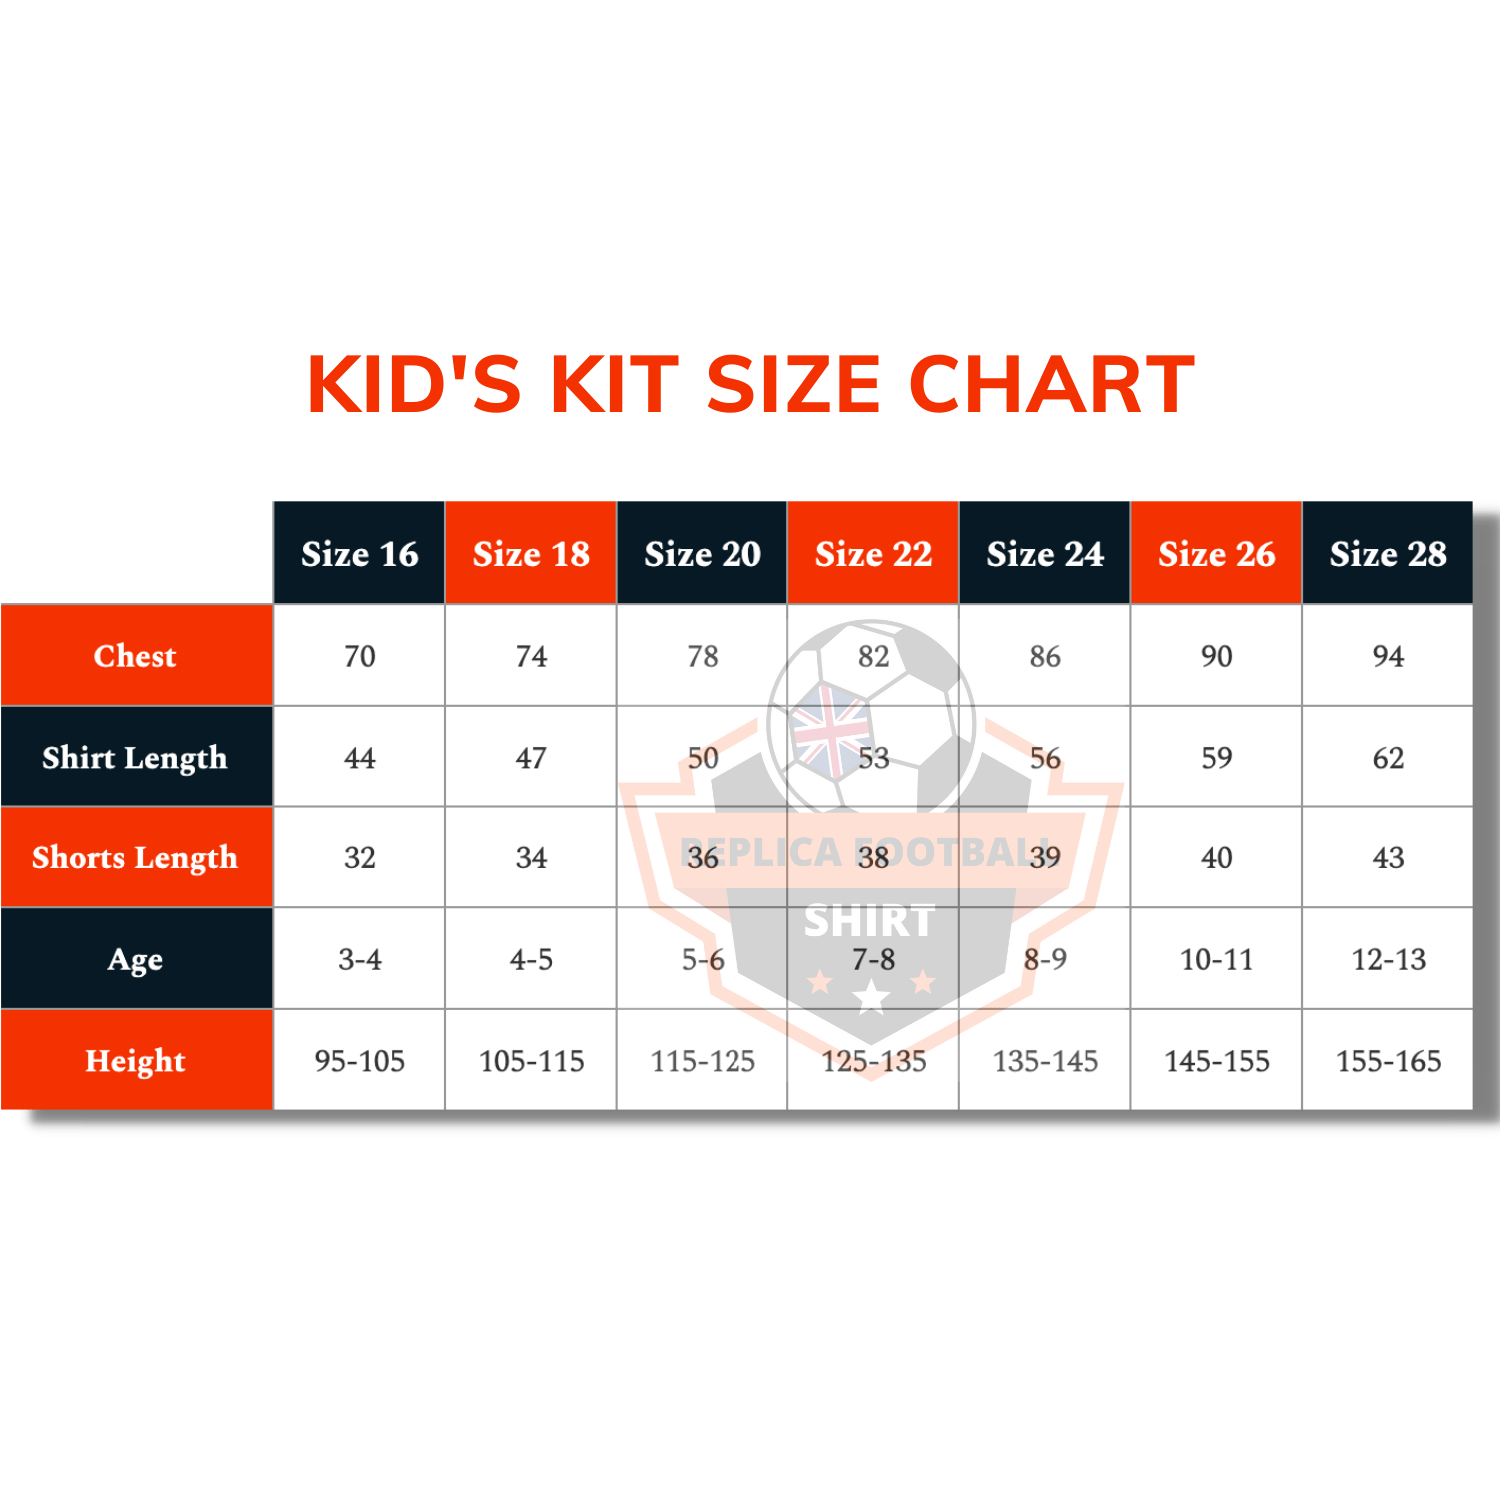 Kids Kit Size Chart